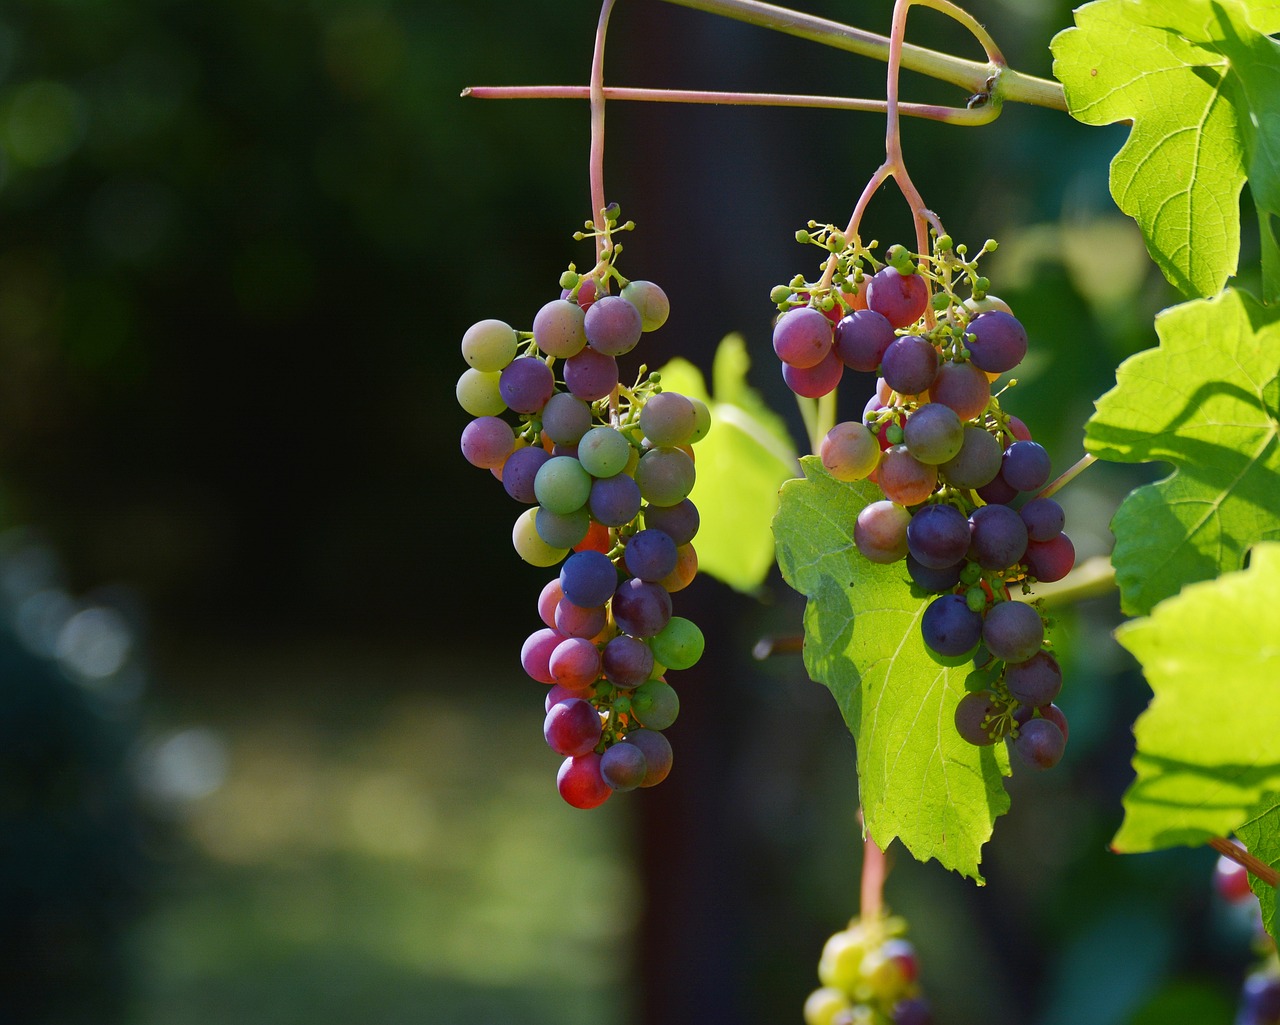 Enjoy winetoursim in vineyards or in acellar